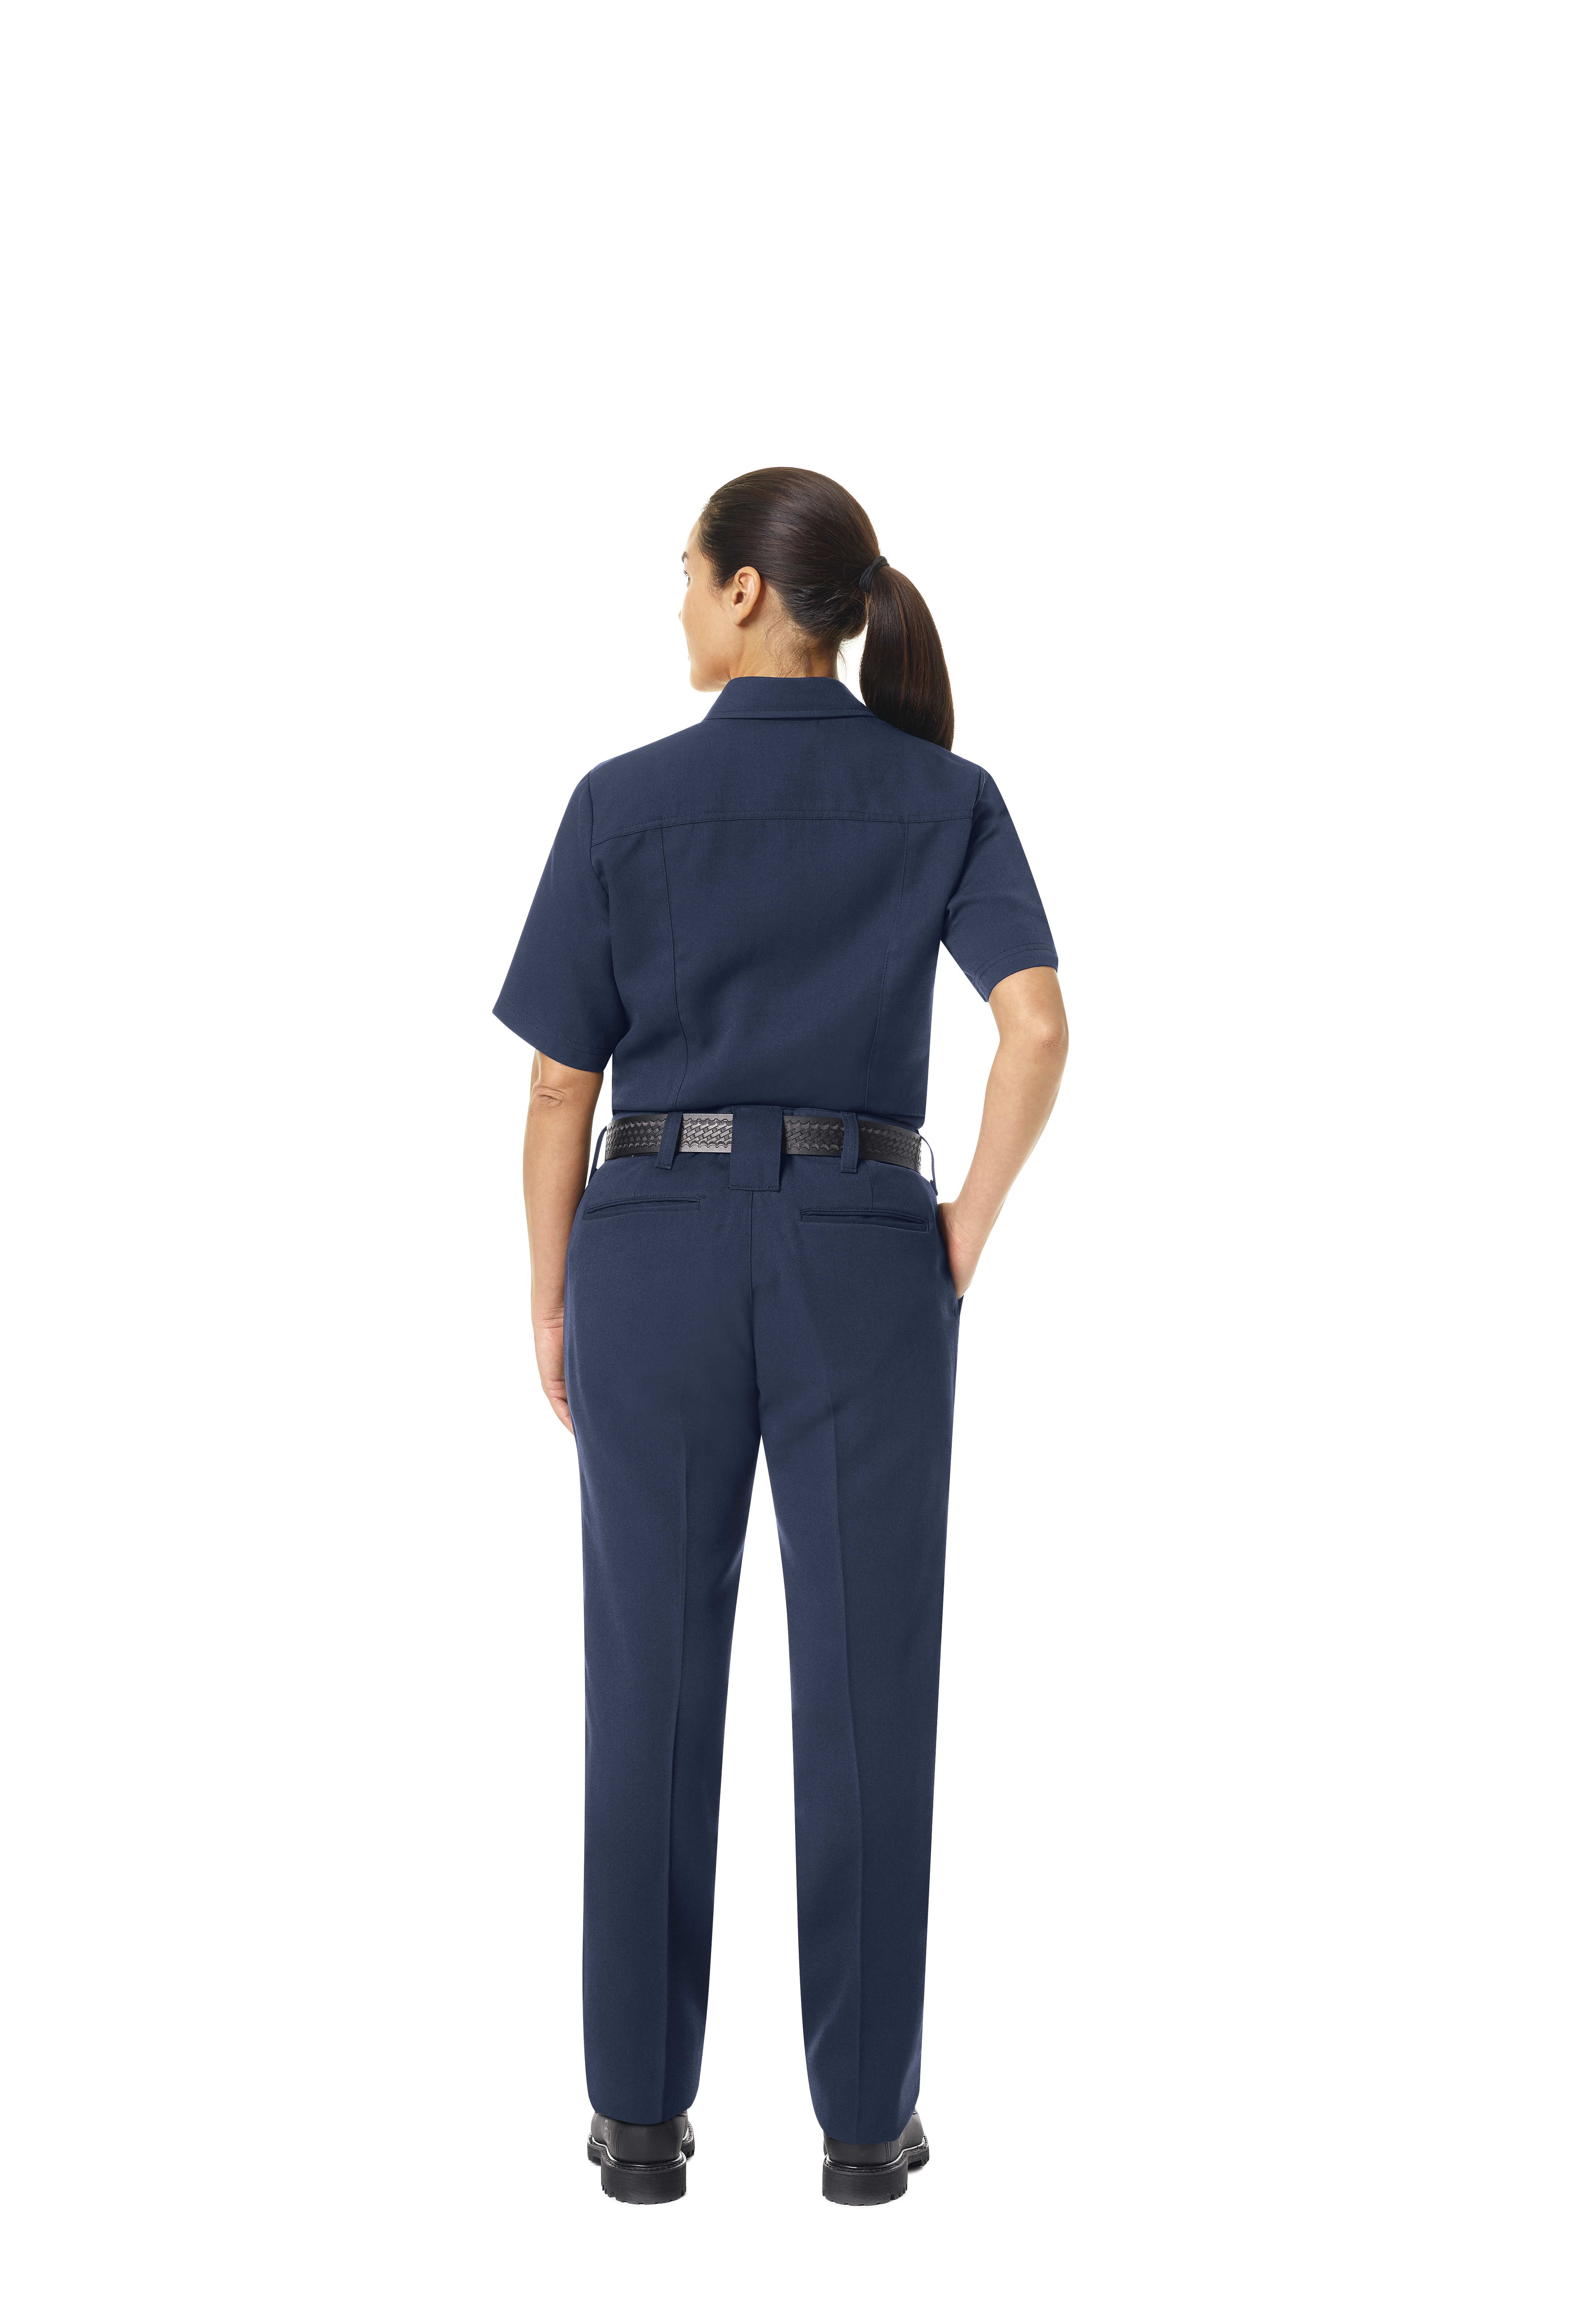 Dovetail Women's Anna Task Pant - Uniform Navy – Lenny's Shoe & Apparel